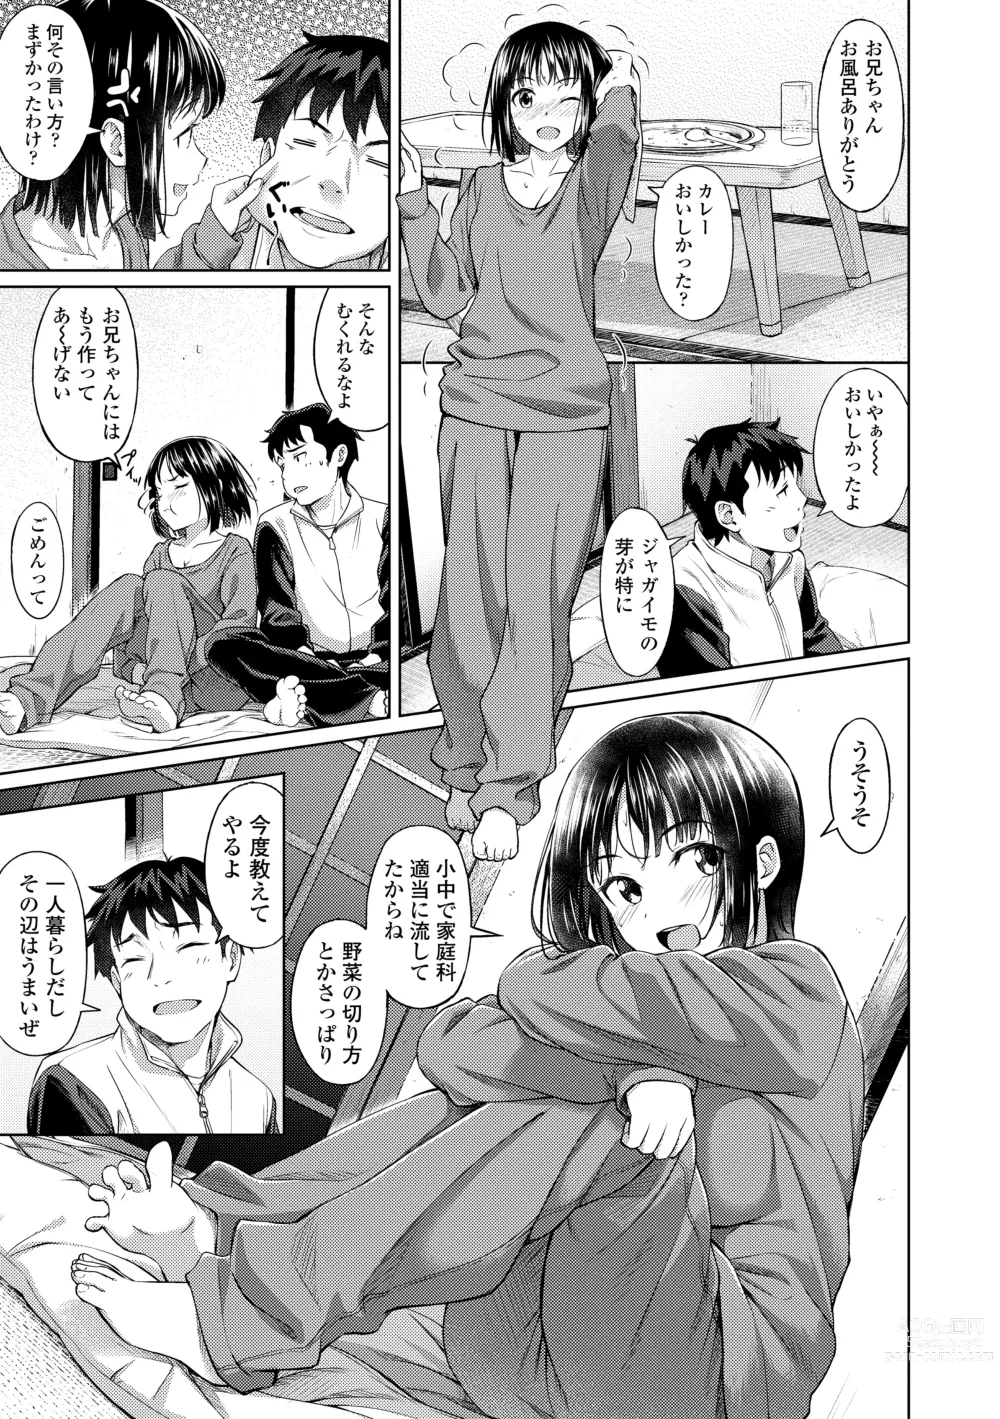 Page 7 of manga Aolove